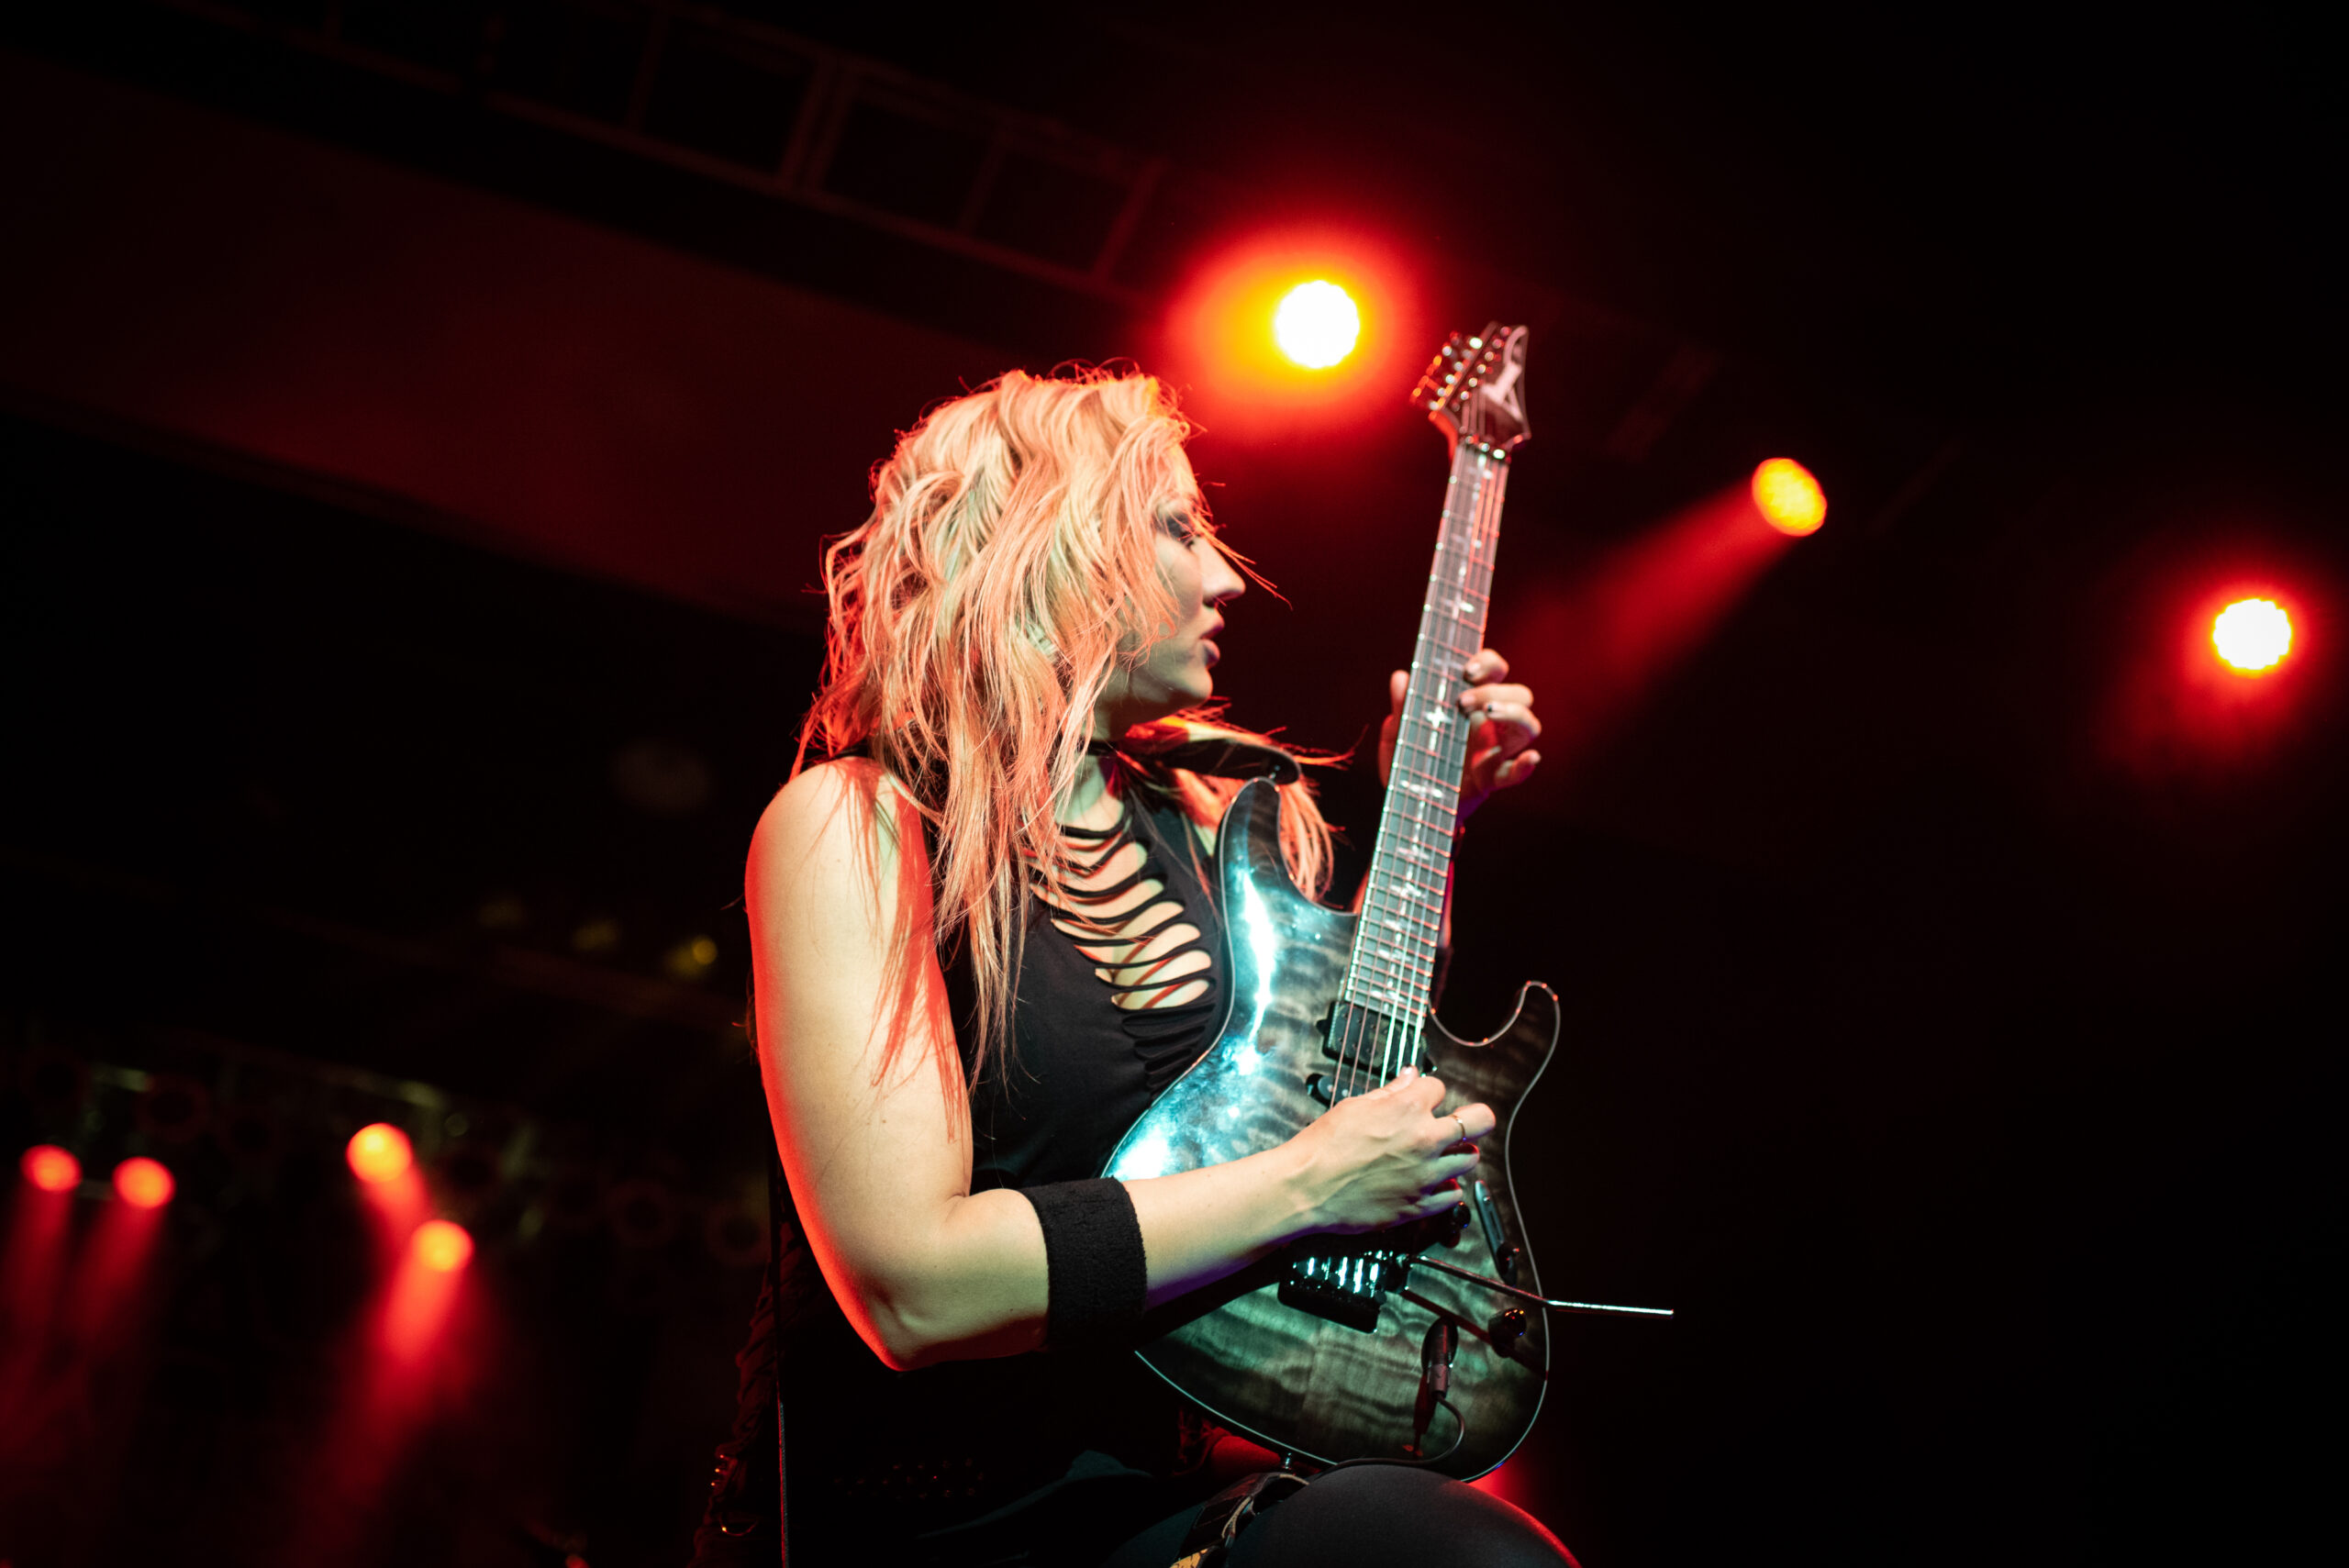 Guitarist Nita Straus live on stage in Michigan.